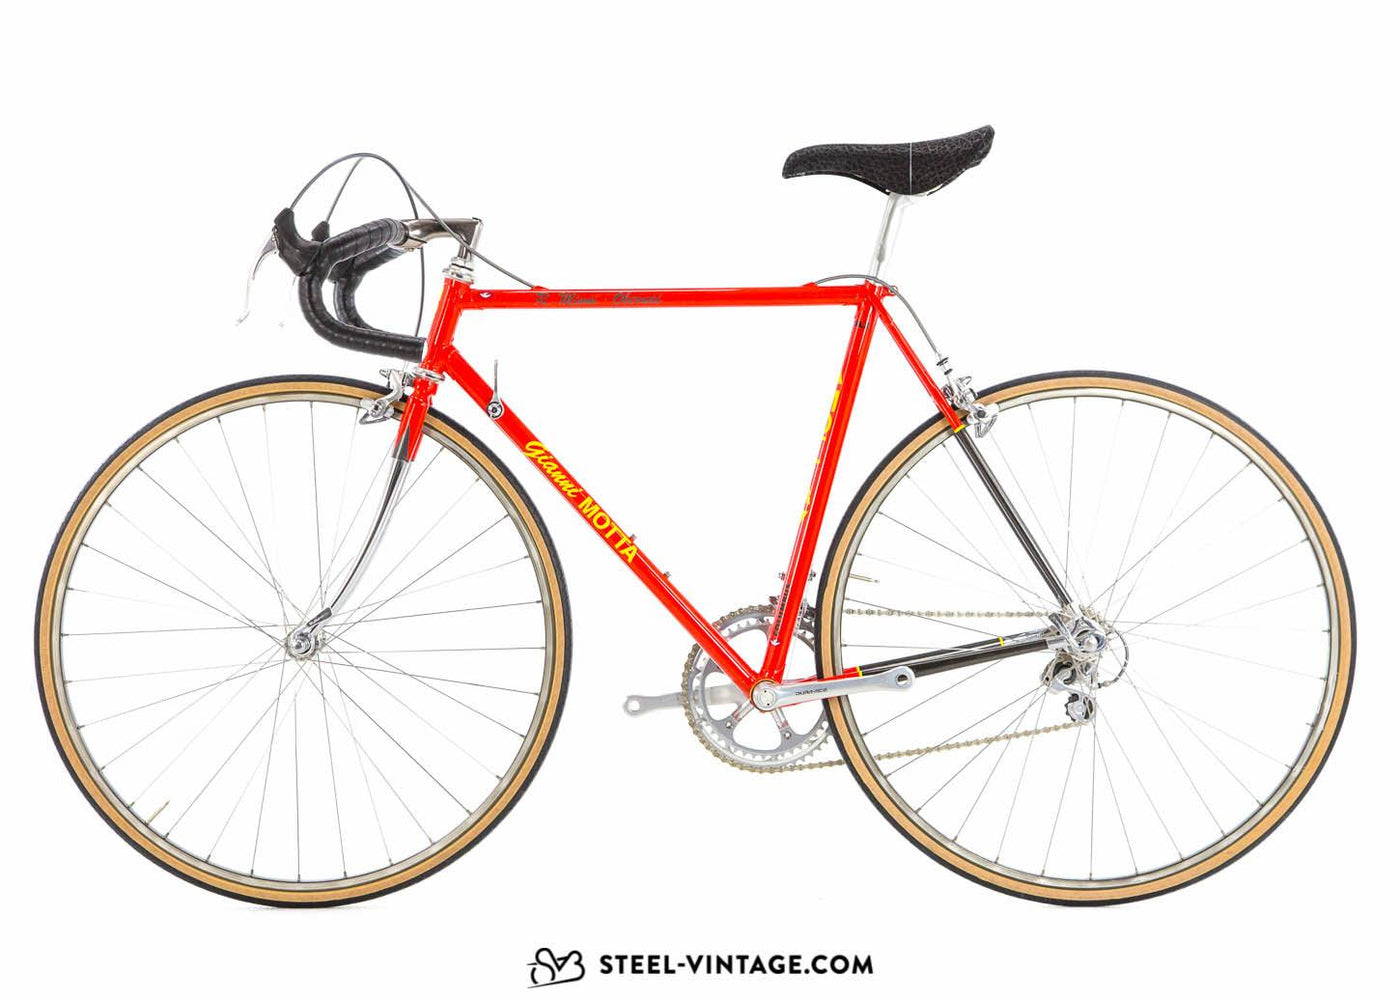 Gianni Motta Personal 2001R Classic Road Bike 1980s - Steel Vintage Bikes